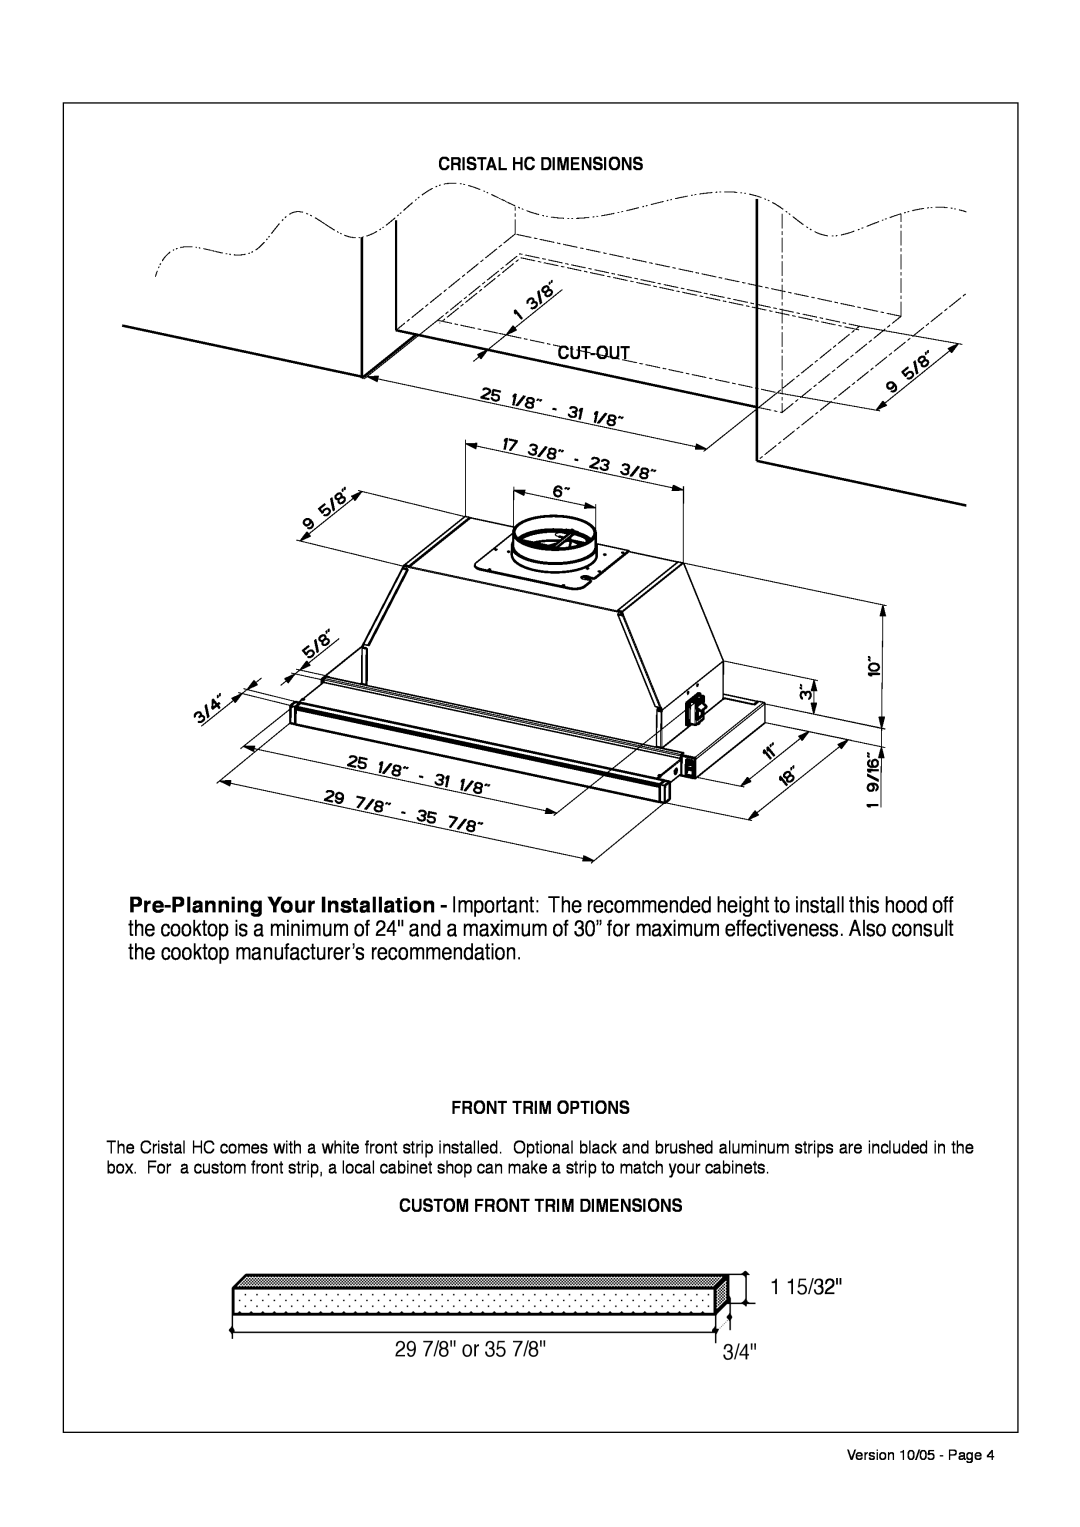 Faber CRISTAL HC installation instructions 1 15/32 